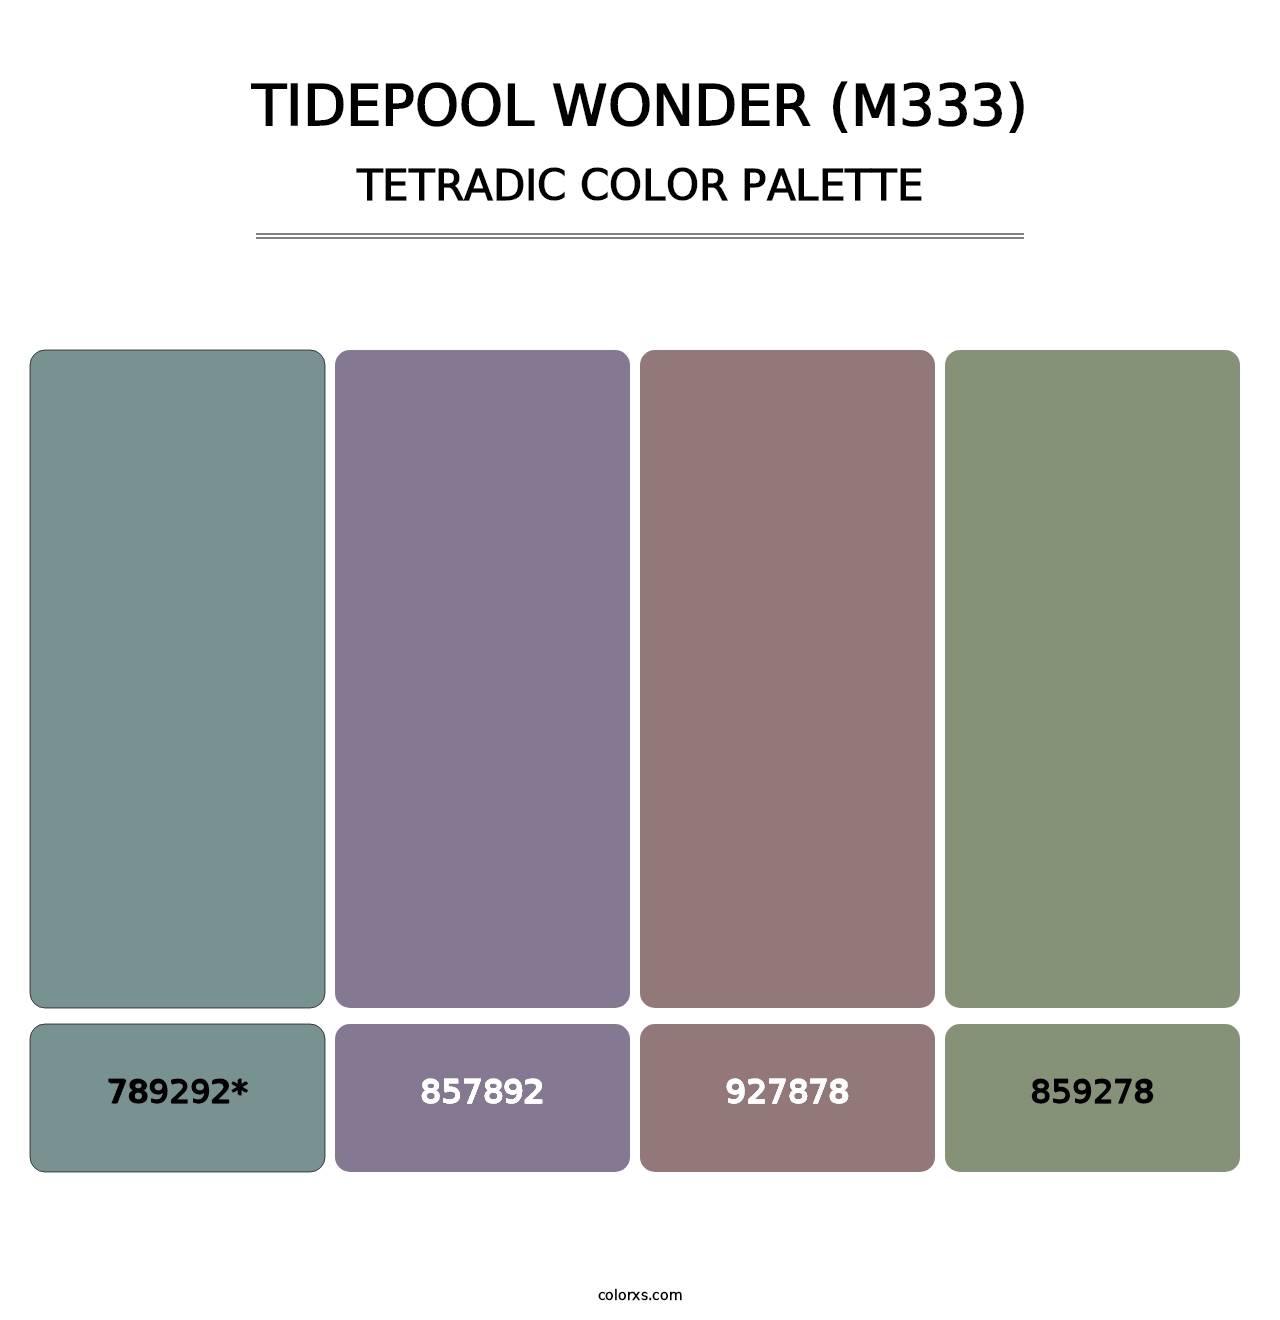 Tidepool Wonder (M333) - Tetradic Color Palette